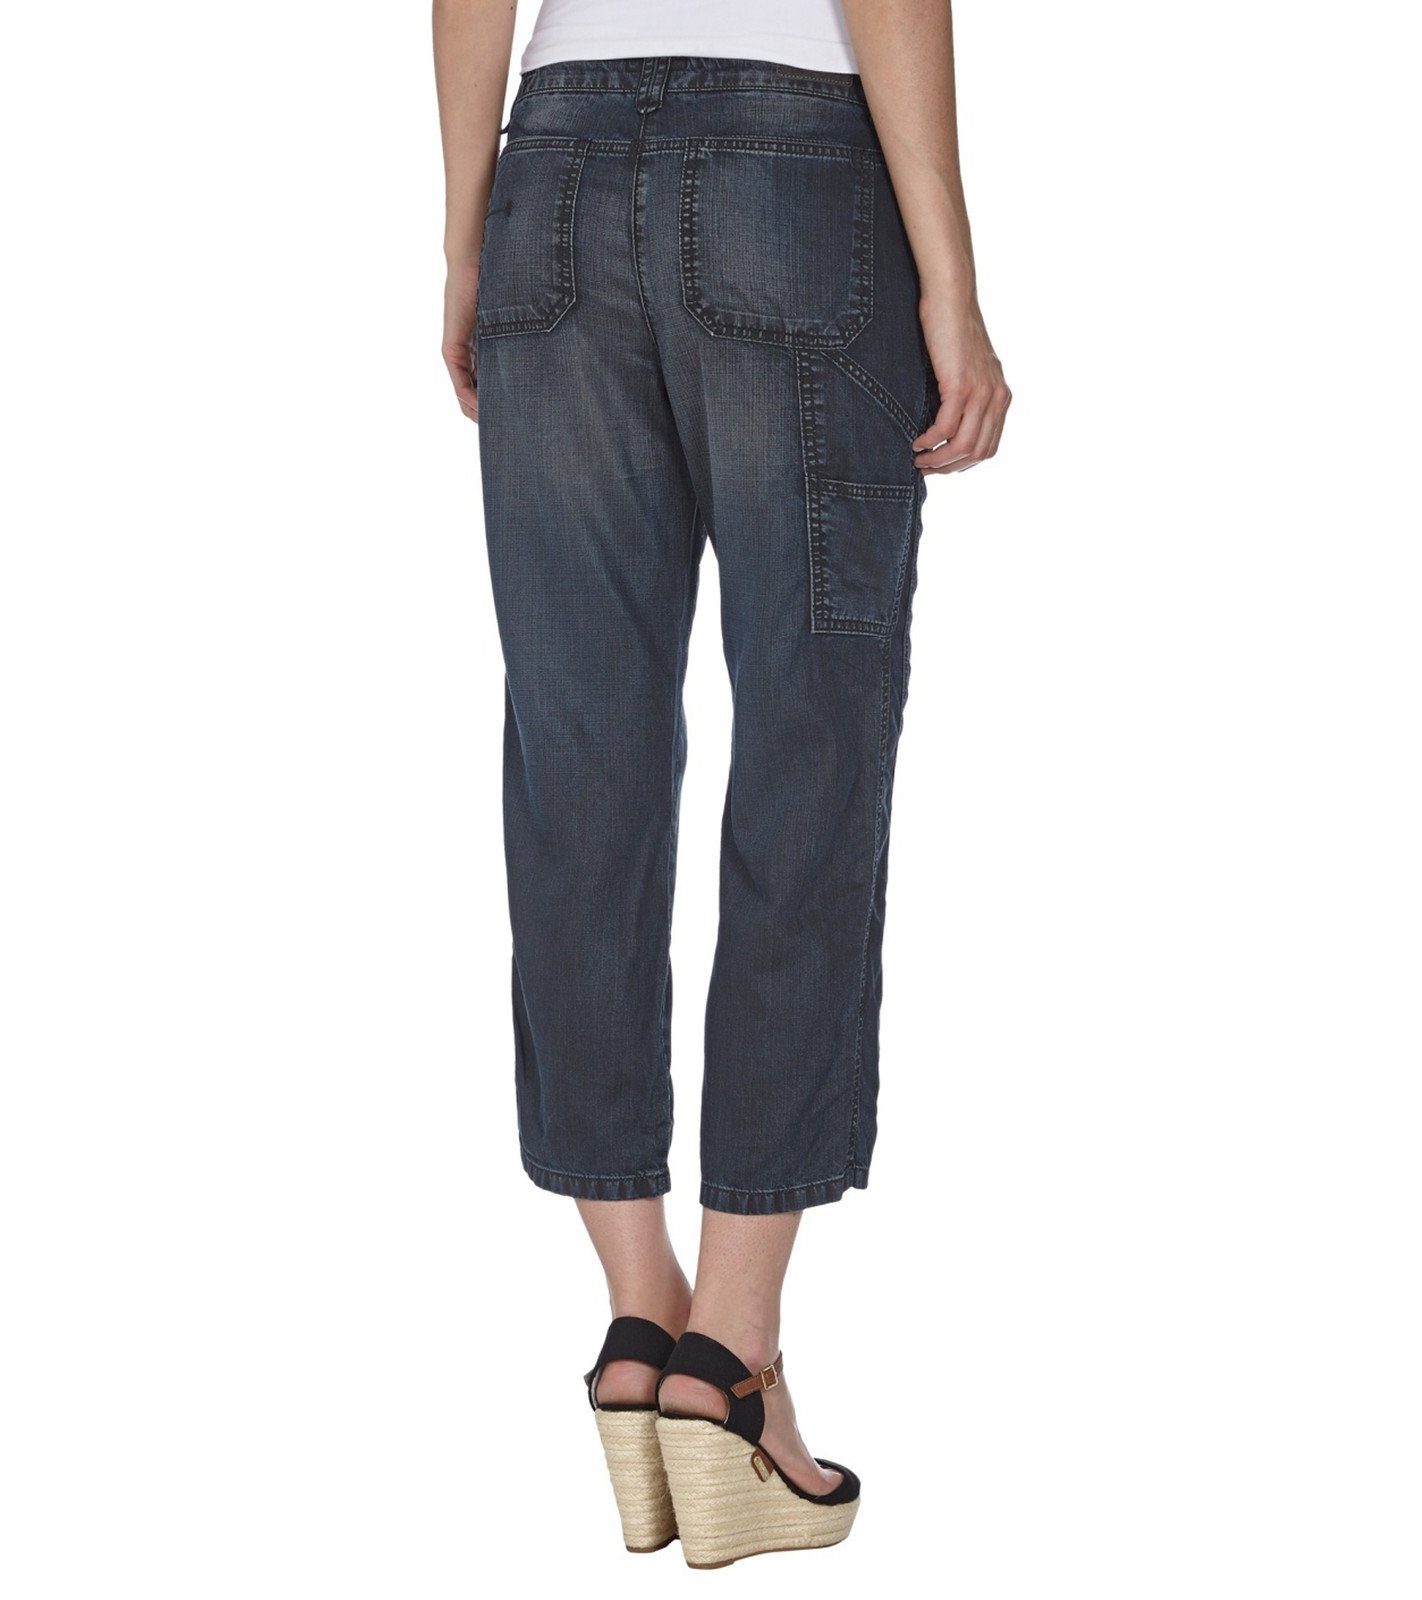 OPUS Caprihose OPUS Melva im Blau Denim-Look und Five-Pocket-Style Alltags-Jeans modische Capri-Hose Jeans Damen